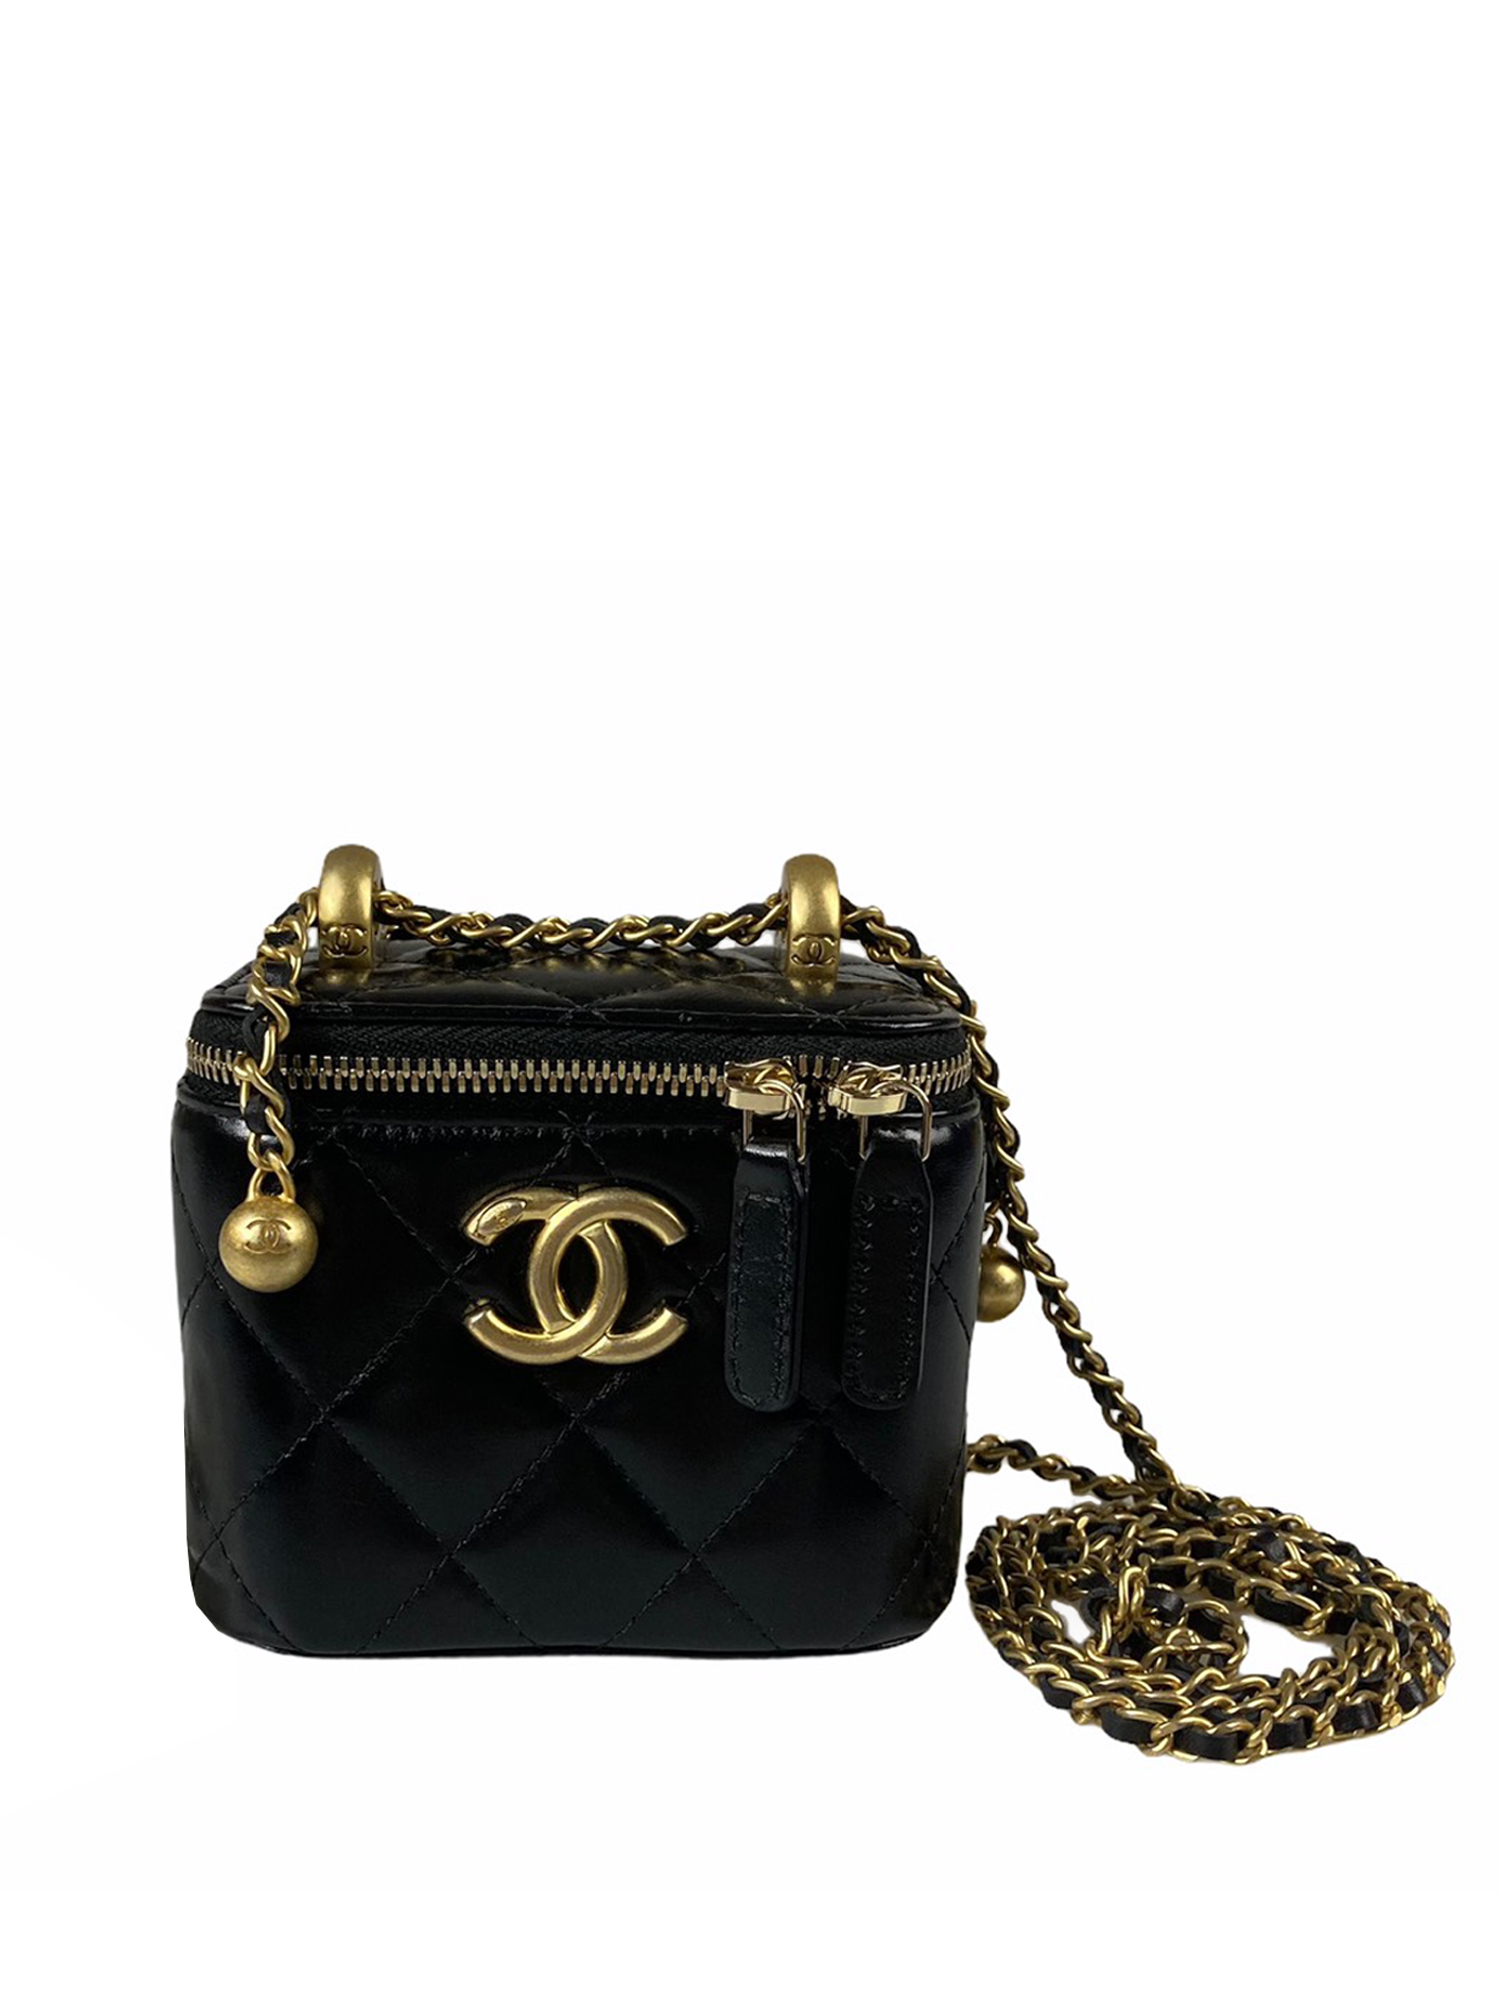 Chanel-Mini-Clutch-Bag-with-Chain-VIP-in-Black-Holo-31-1